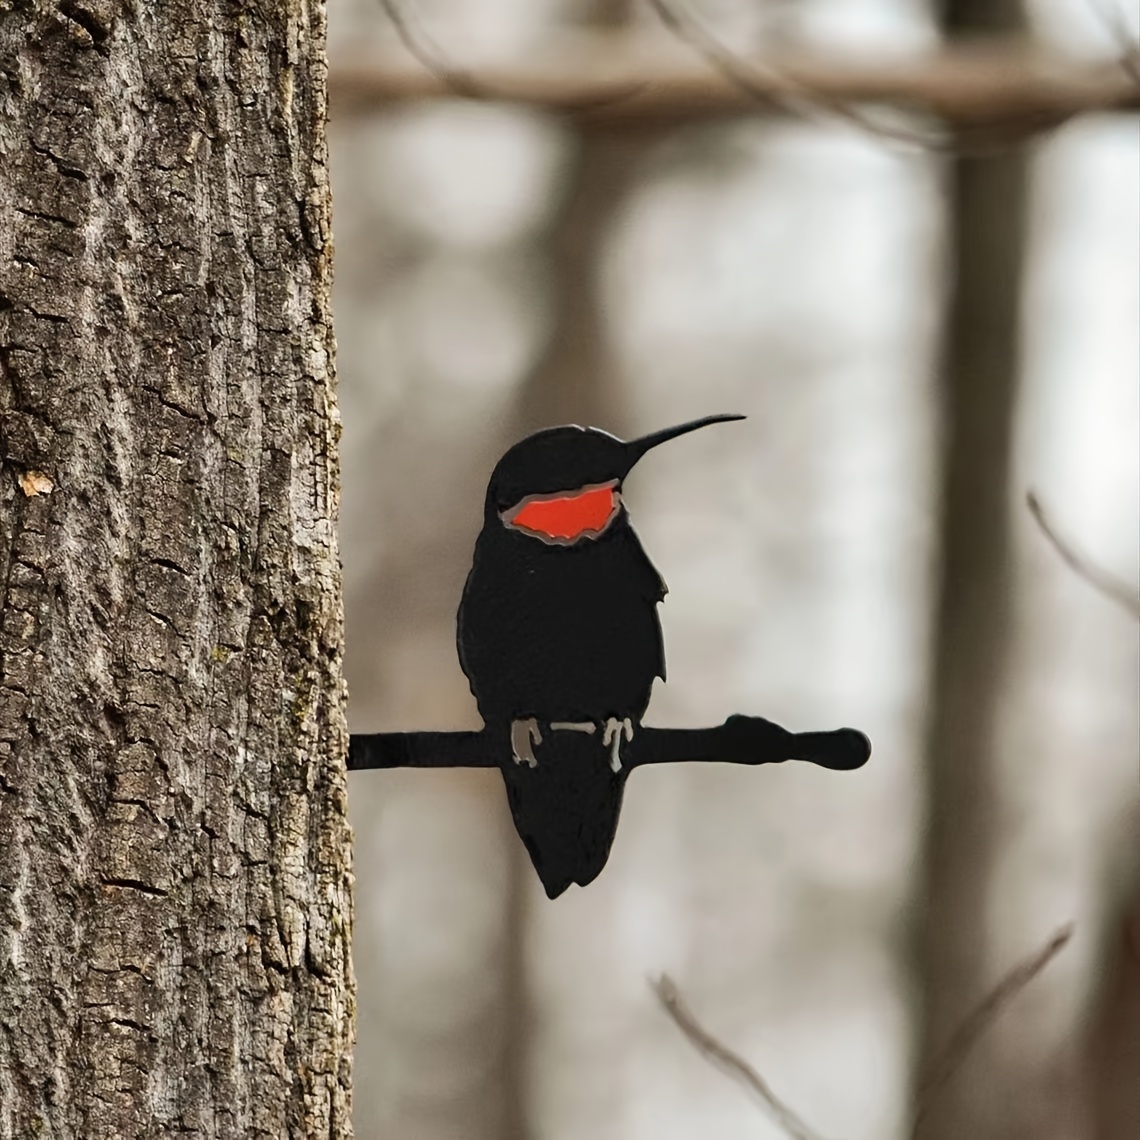 

1pc, Metallic Creative Black Silhouette Hummingbird Outdoor Courtyard Garden Wooden Stake Plug-in Ornament